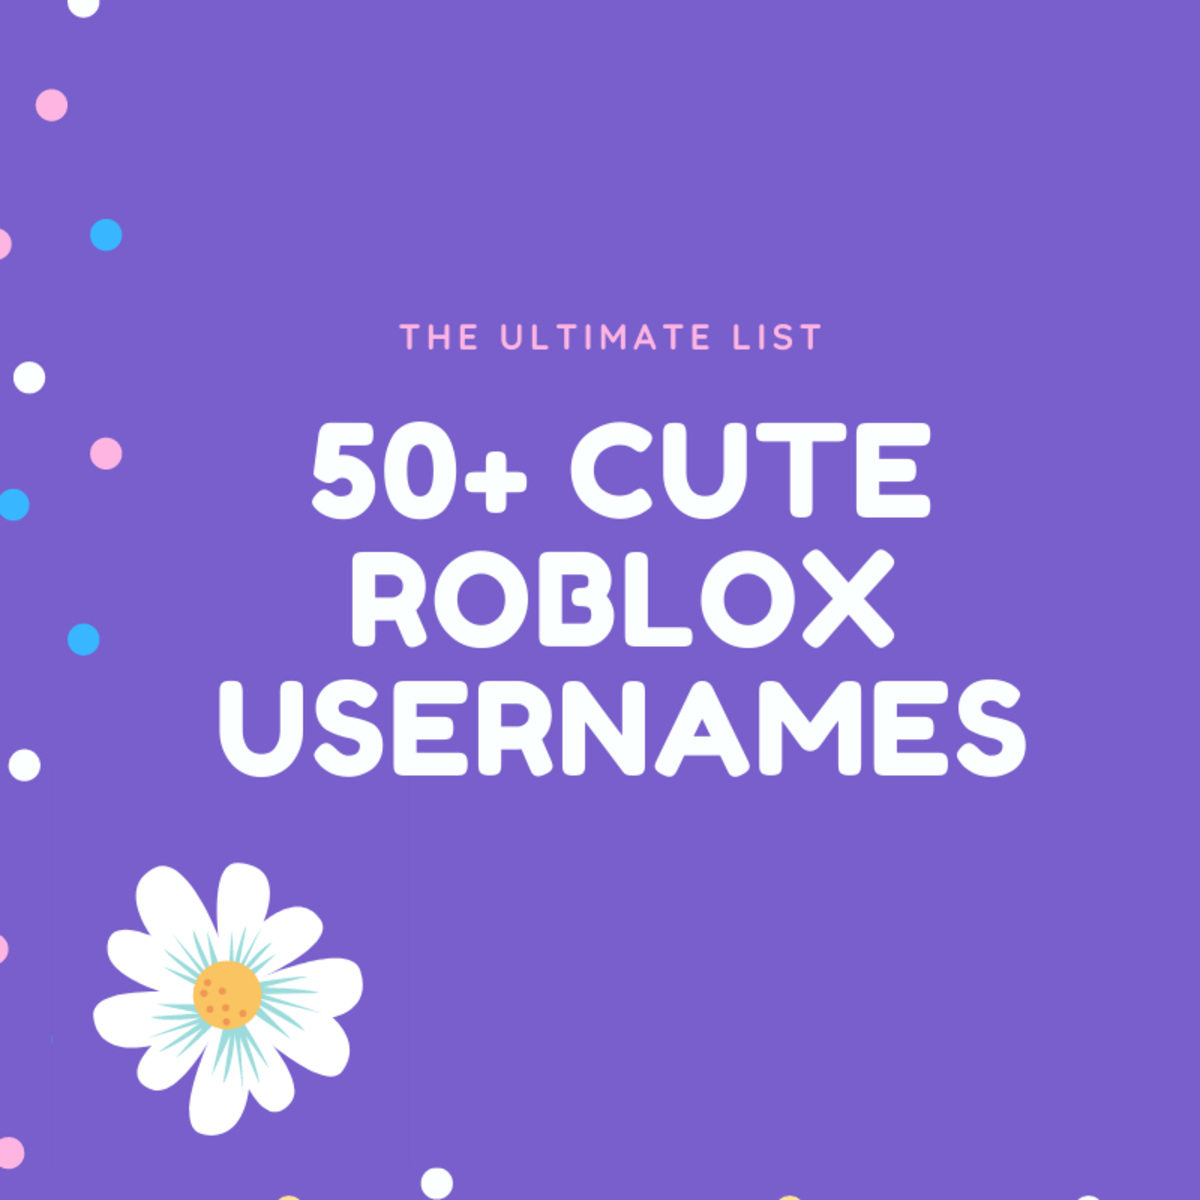 50+ Cute Roblox Usernames: The Ultimate List - TurboFuture